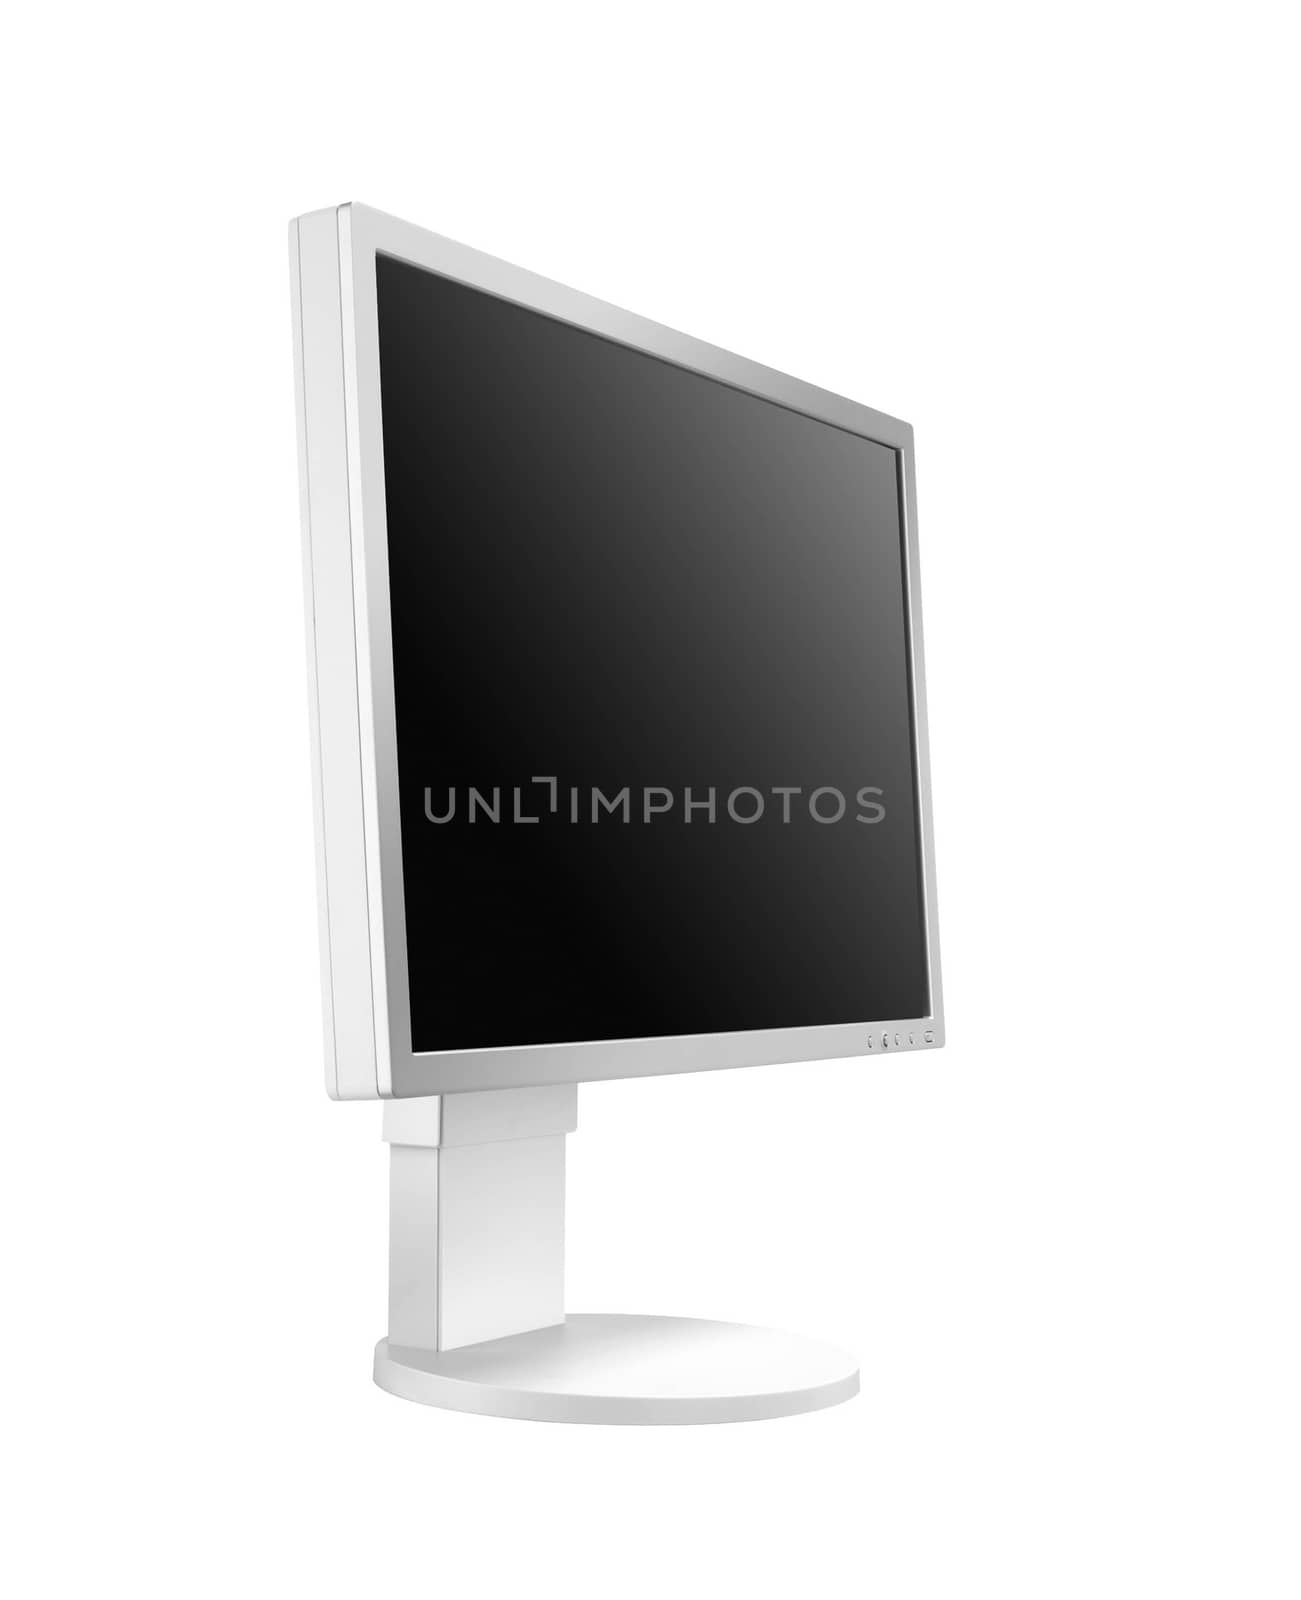 white monitor by shutswis